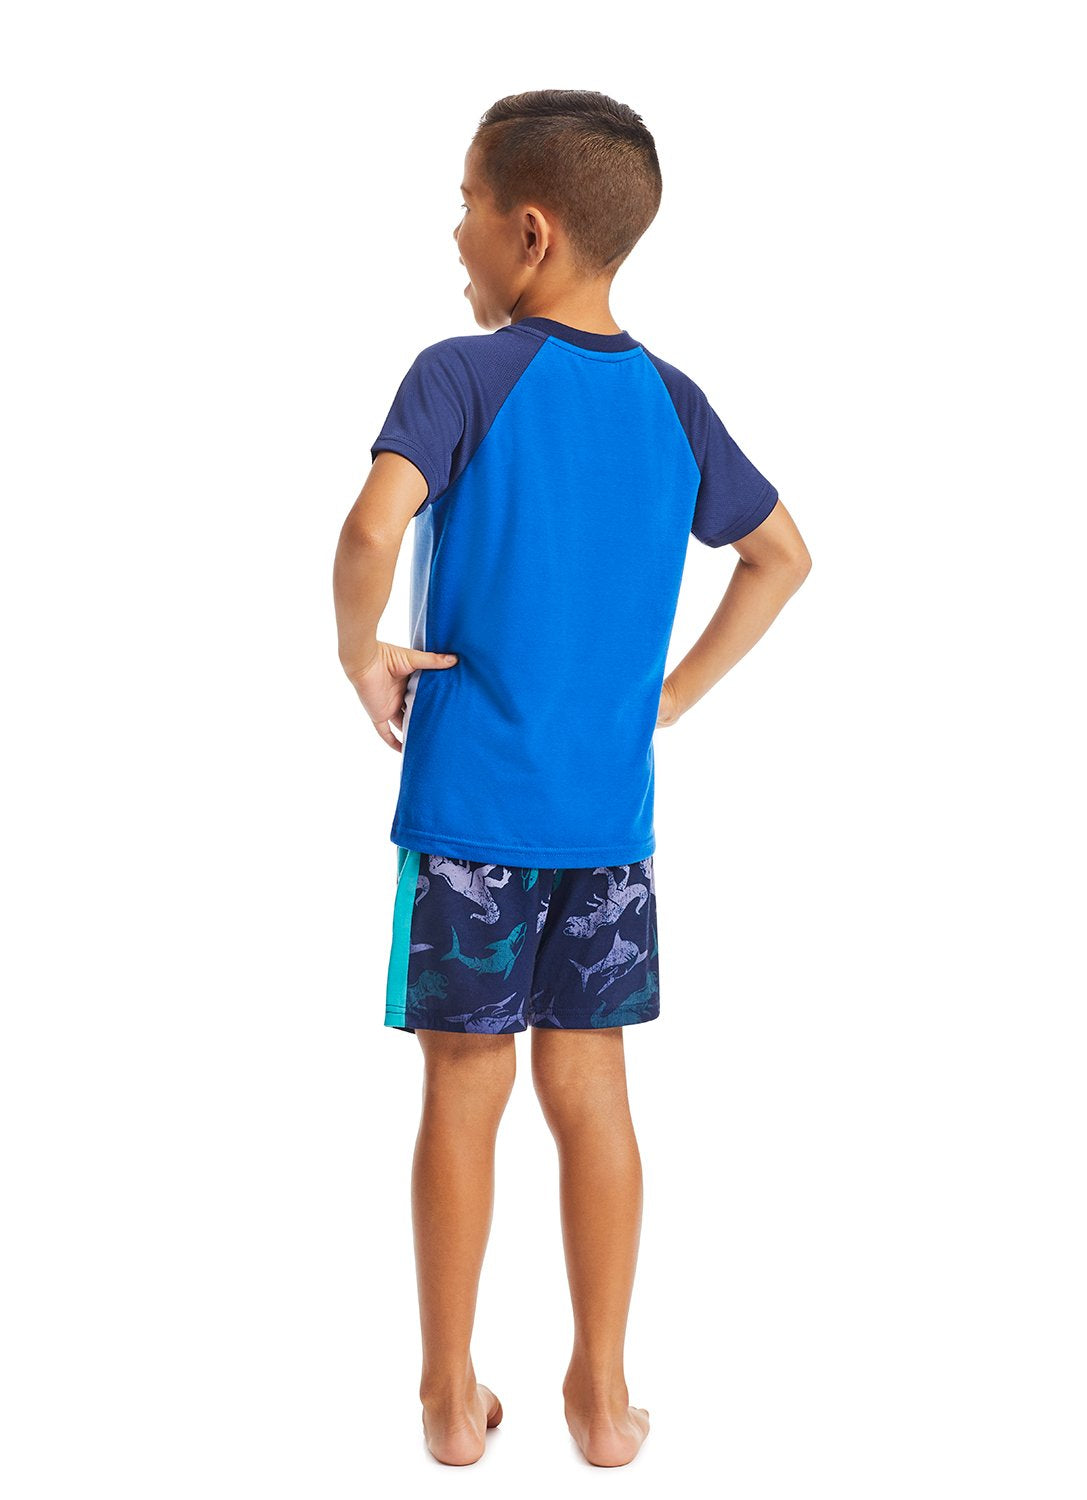 Back view Boy wearing Dino pajama set, t-shirt and shorts